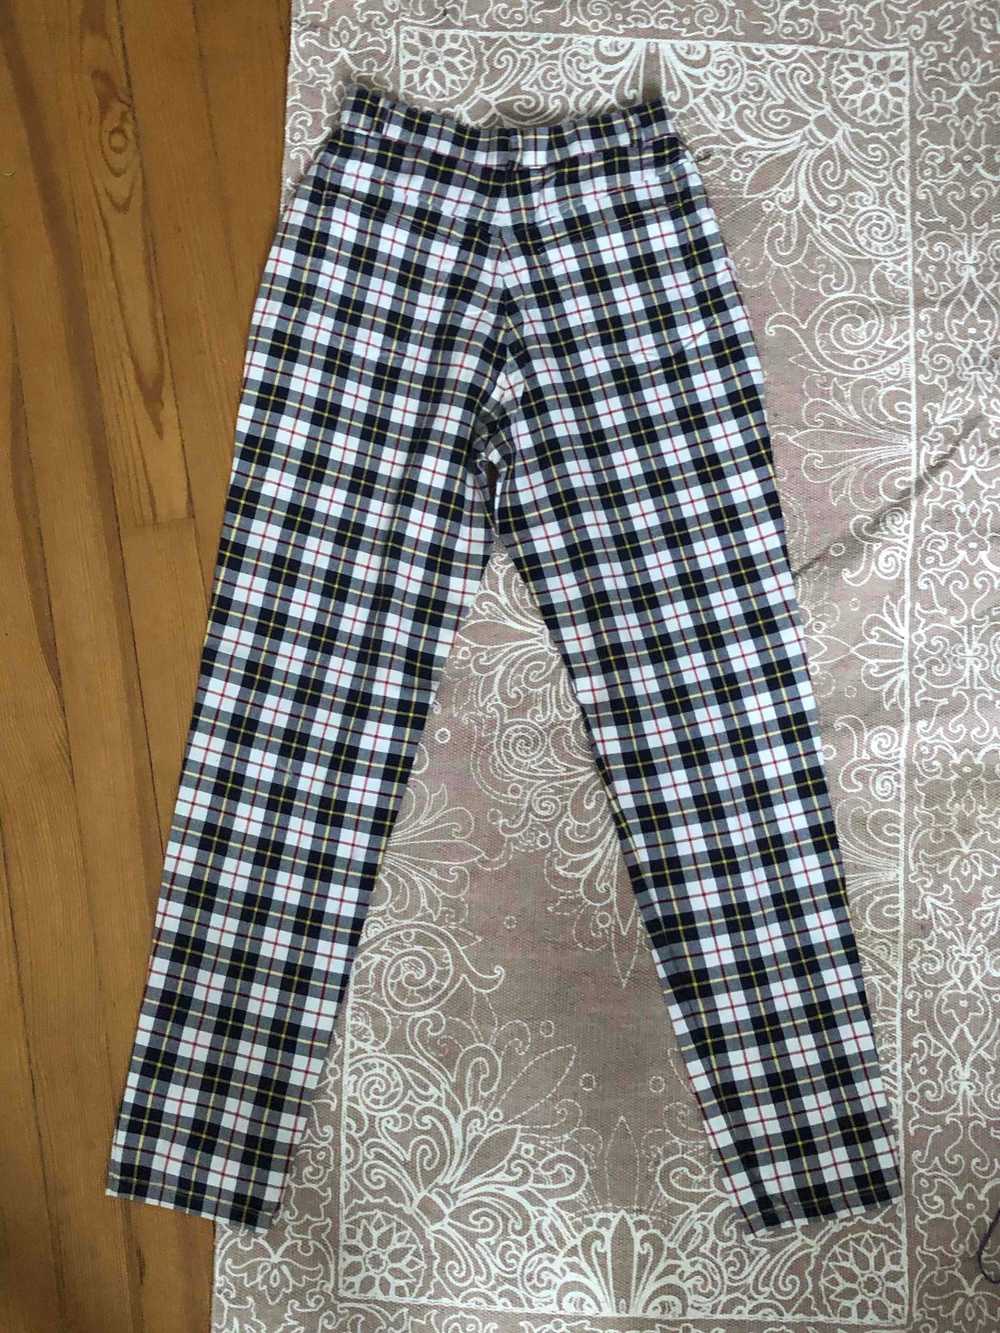 Pantalon tartan - Pantalon à carreaux marine, jau… - image 2